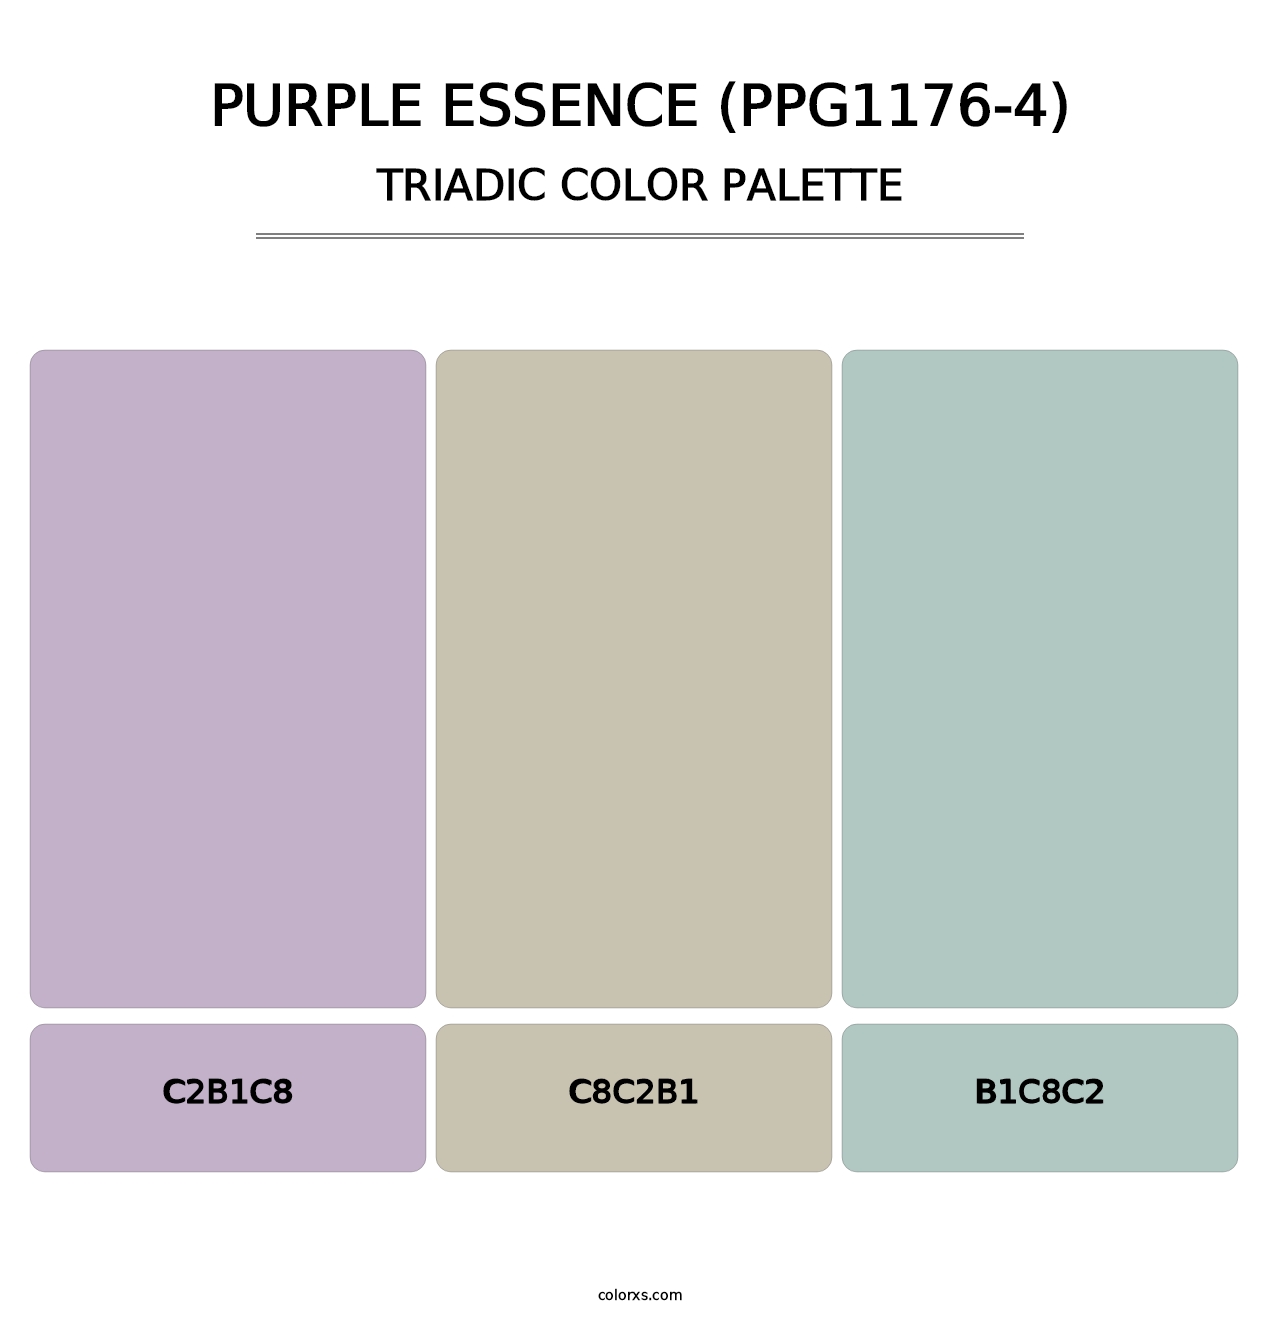 Purple Essence (PPG1176-4) - Triadic Color Palette